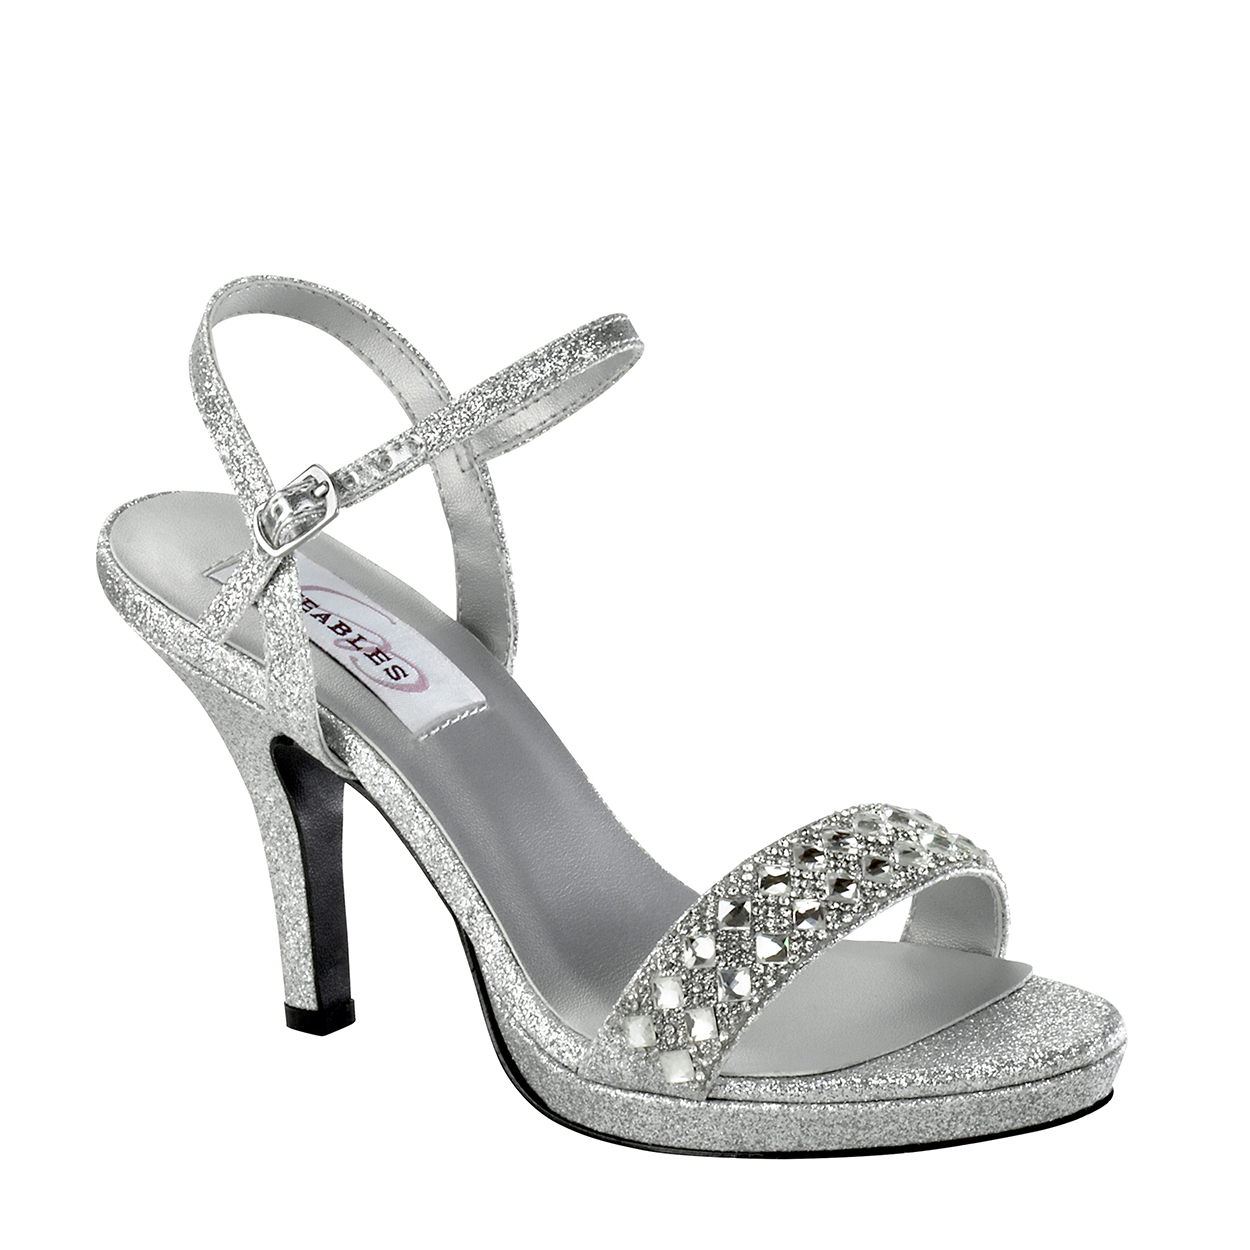 silver strappy heels 3 inch